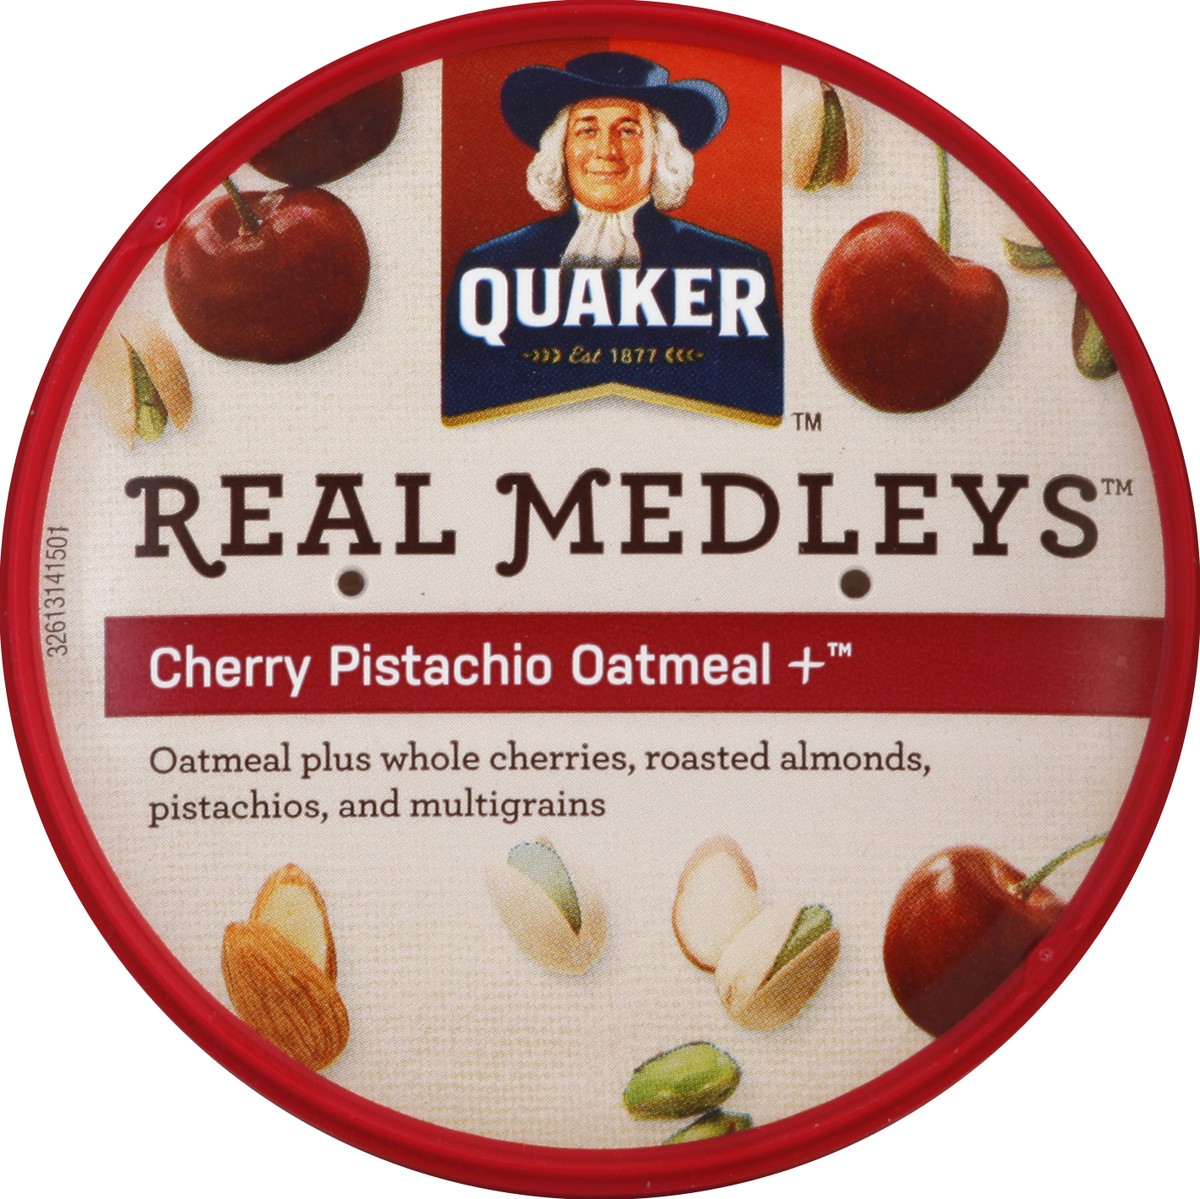 slide 2 of 3, Quaker Real Medleys Cherry Pistachio Oatmeal+, 2.2 oz